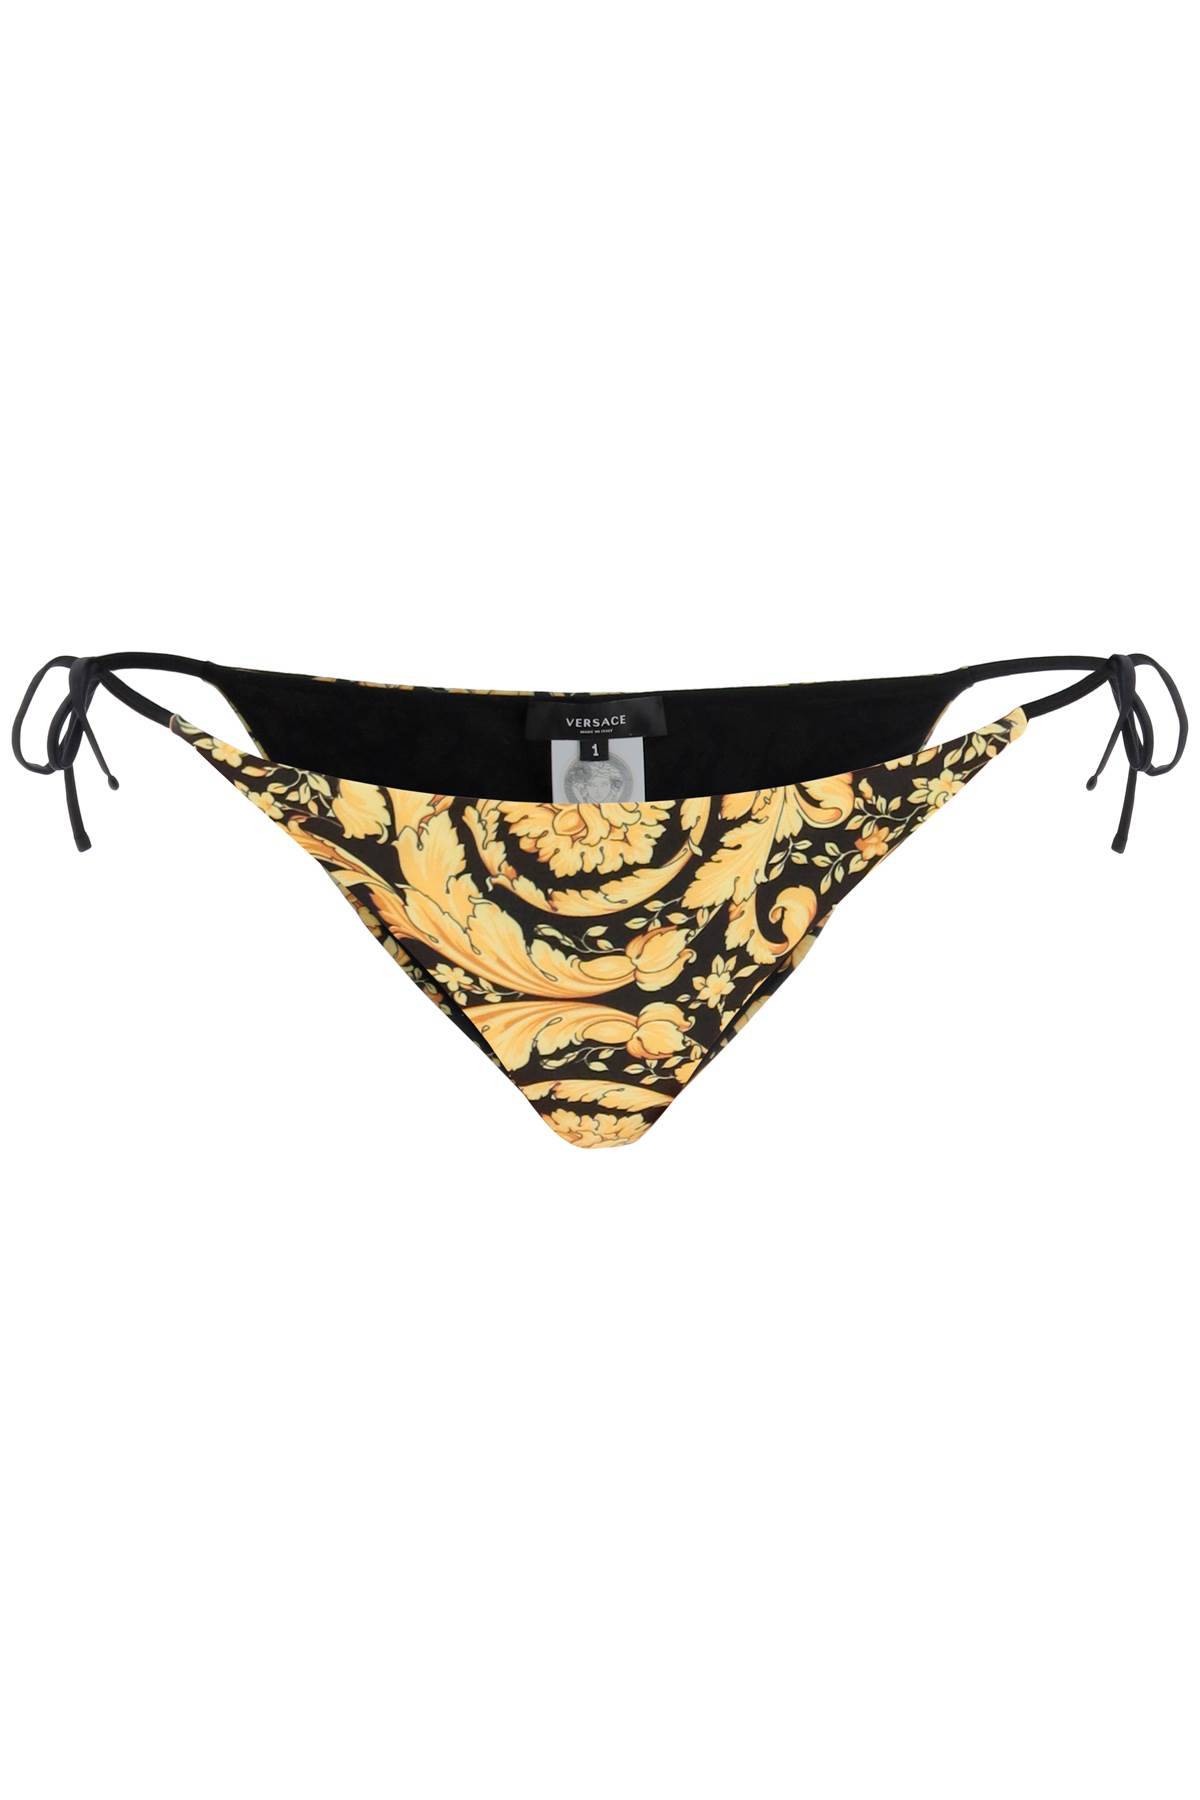 Versace VERSACE barocco bikini bottom